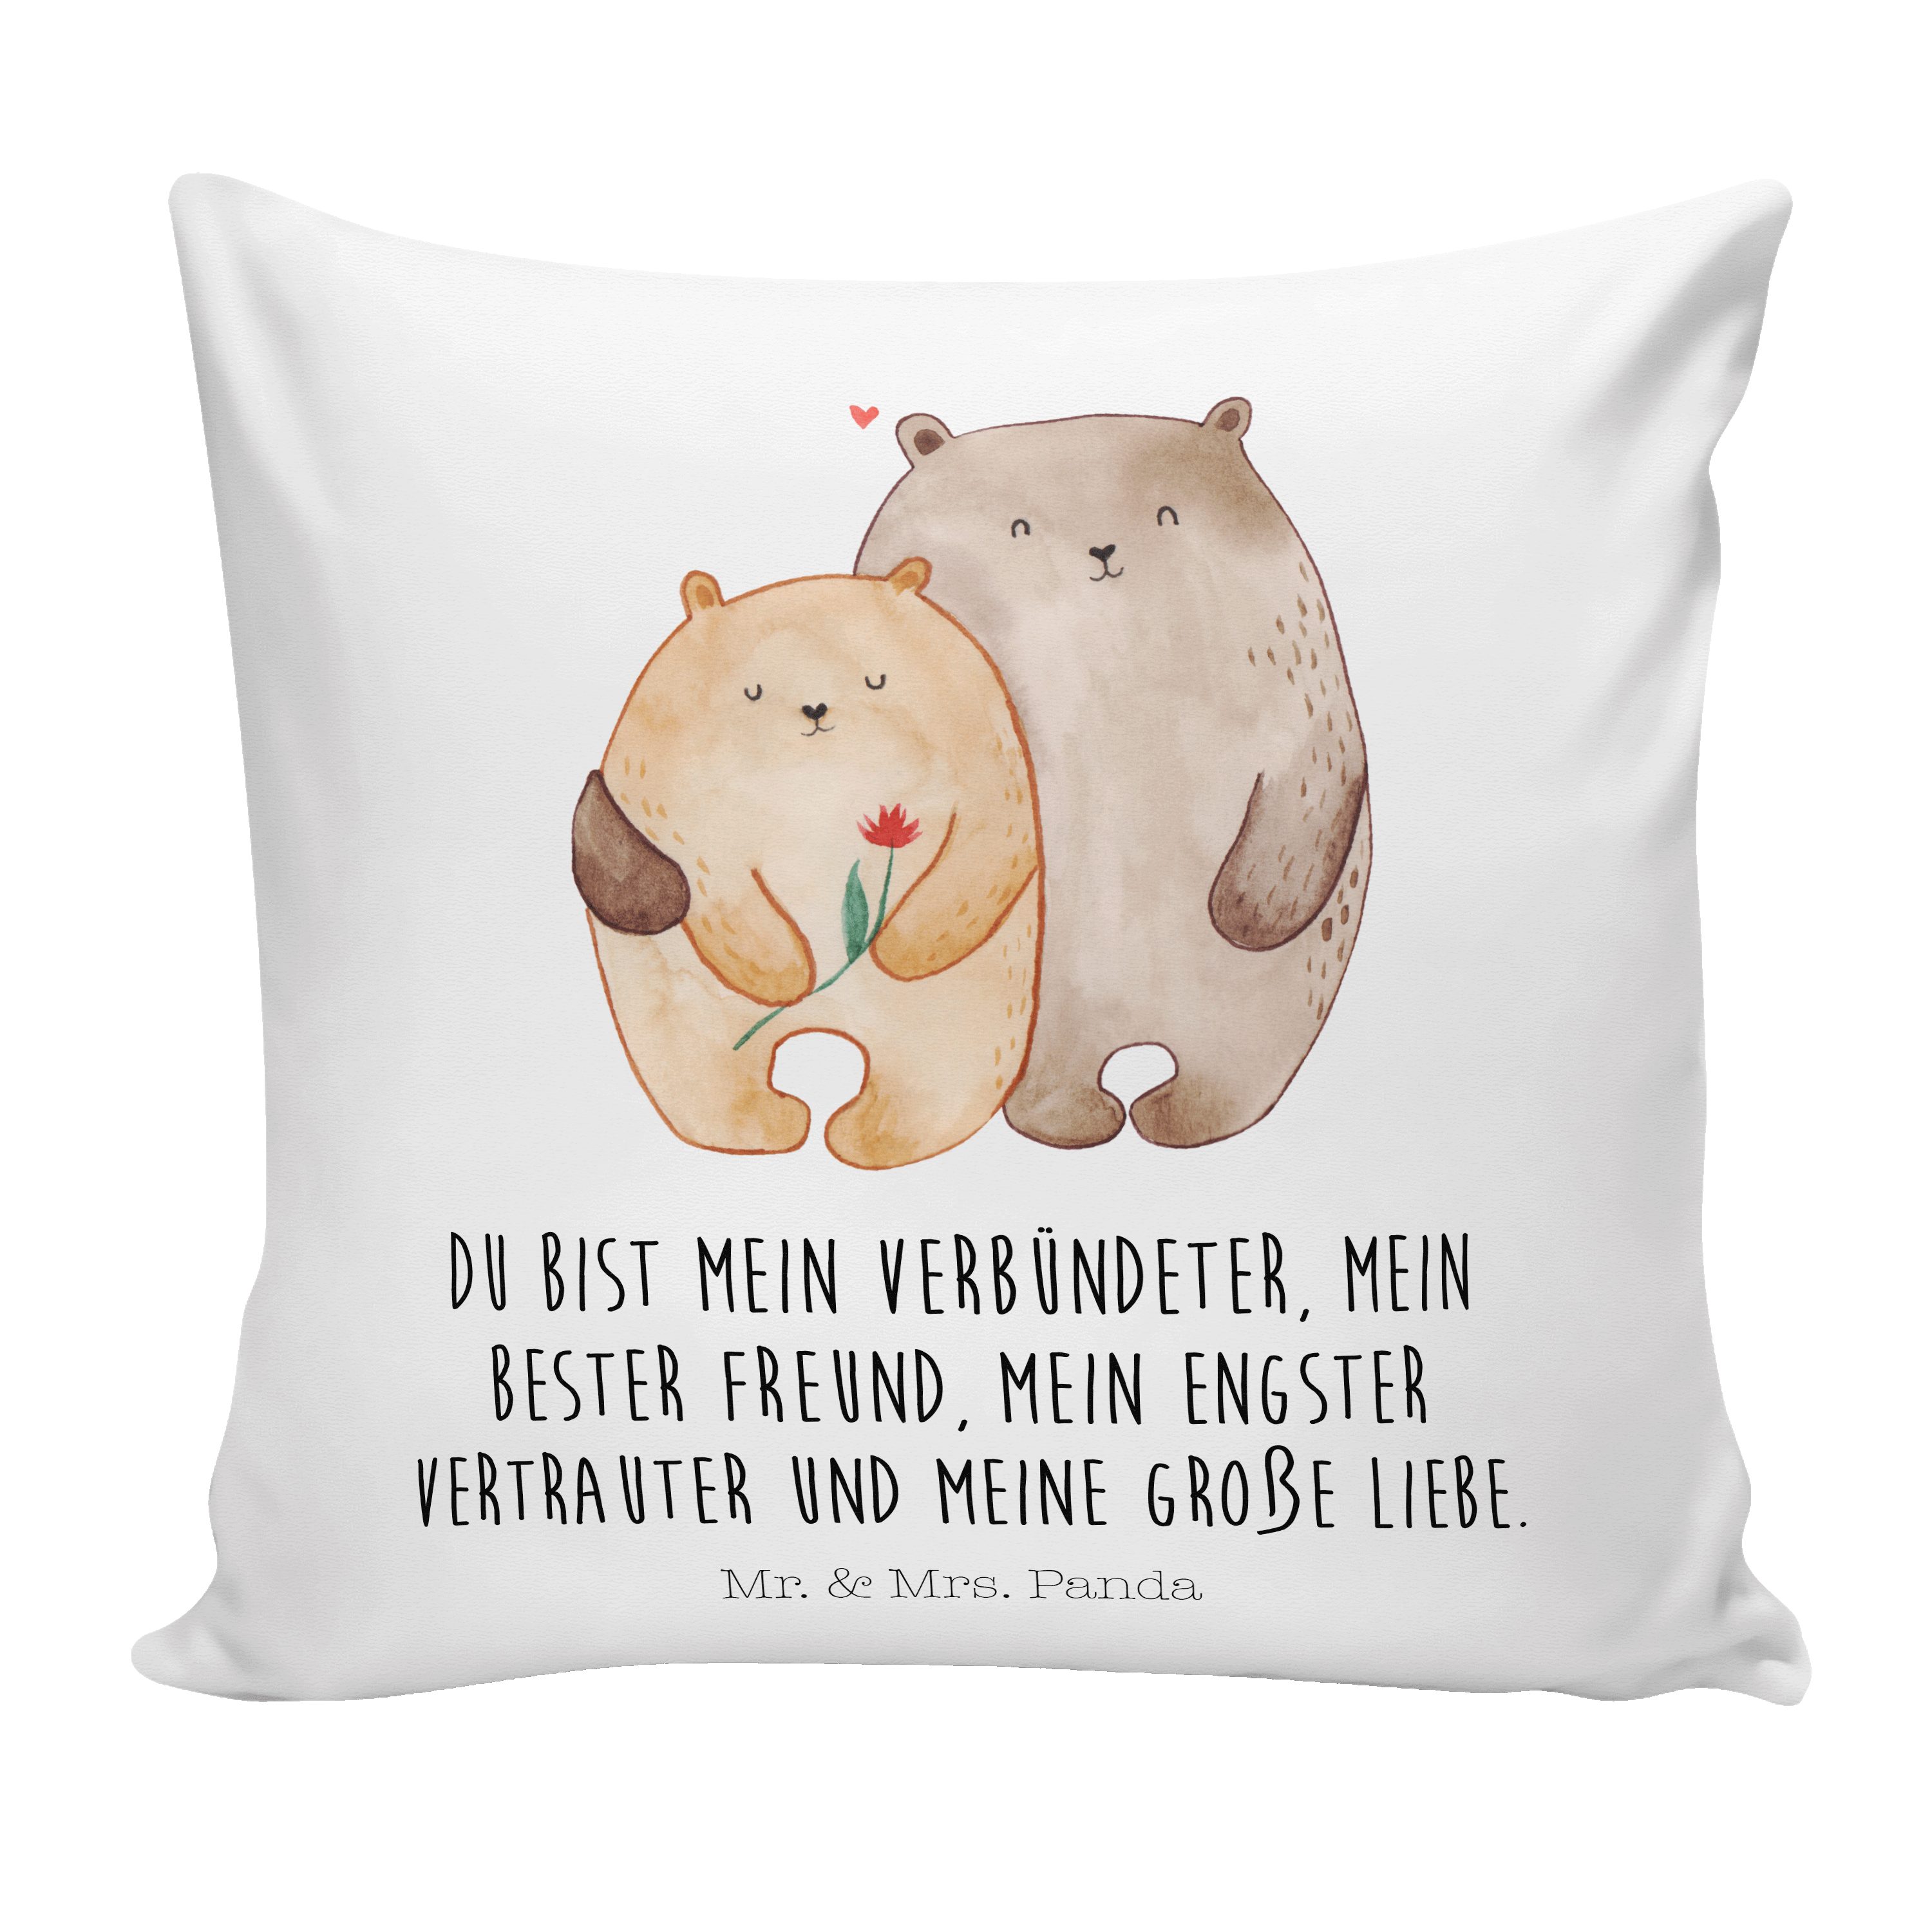 Mr. & Mrs. Panda Dekokissen Bären Liebe - Weiß - Geschenk, Kopfkissen, Bärchen, Verlobung, Kissen